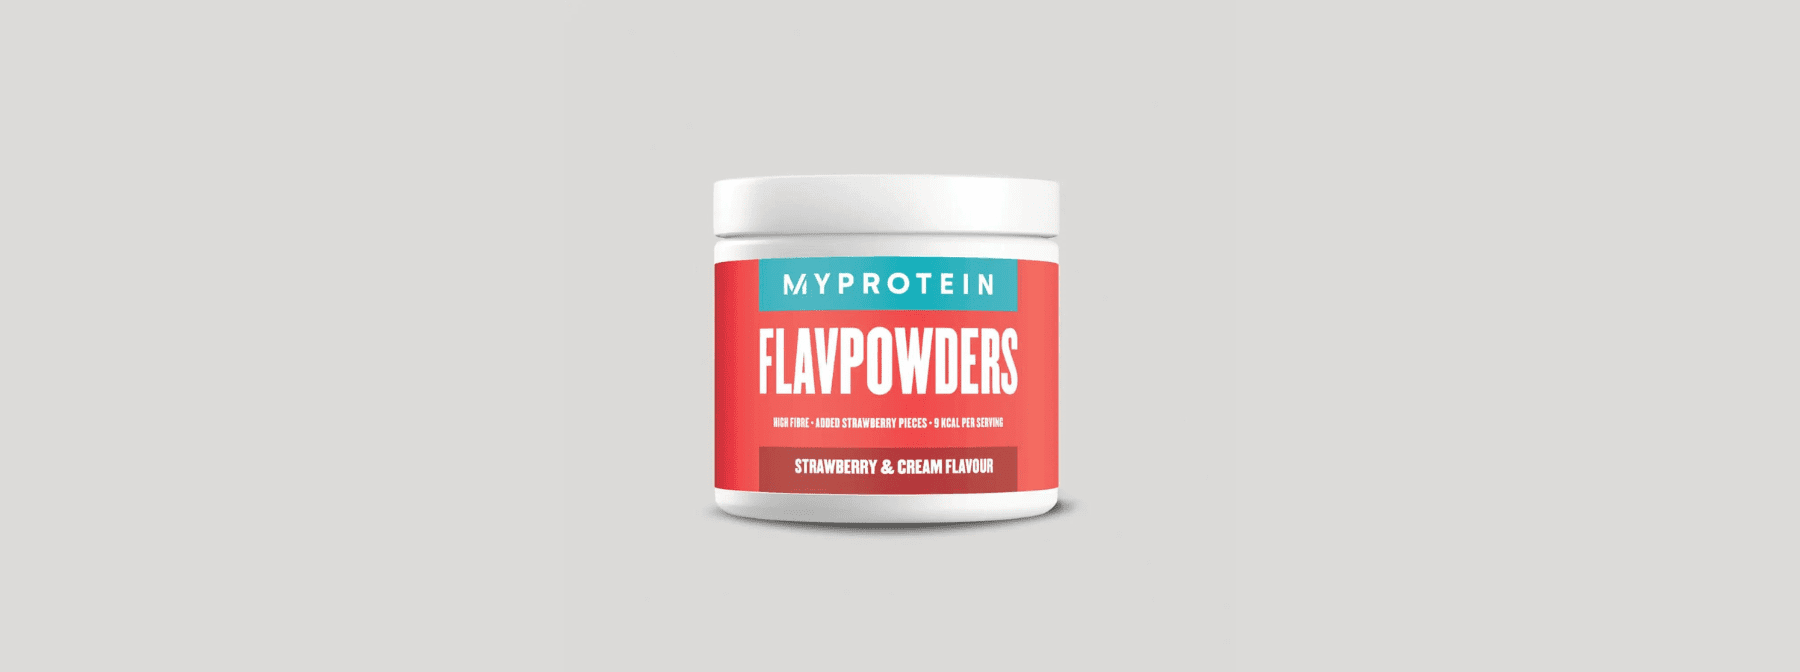 FlavPowders: δώσε γεύση σε ό,τι τρώγεται!